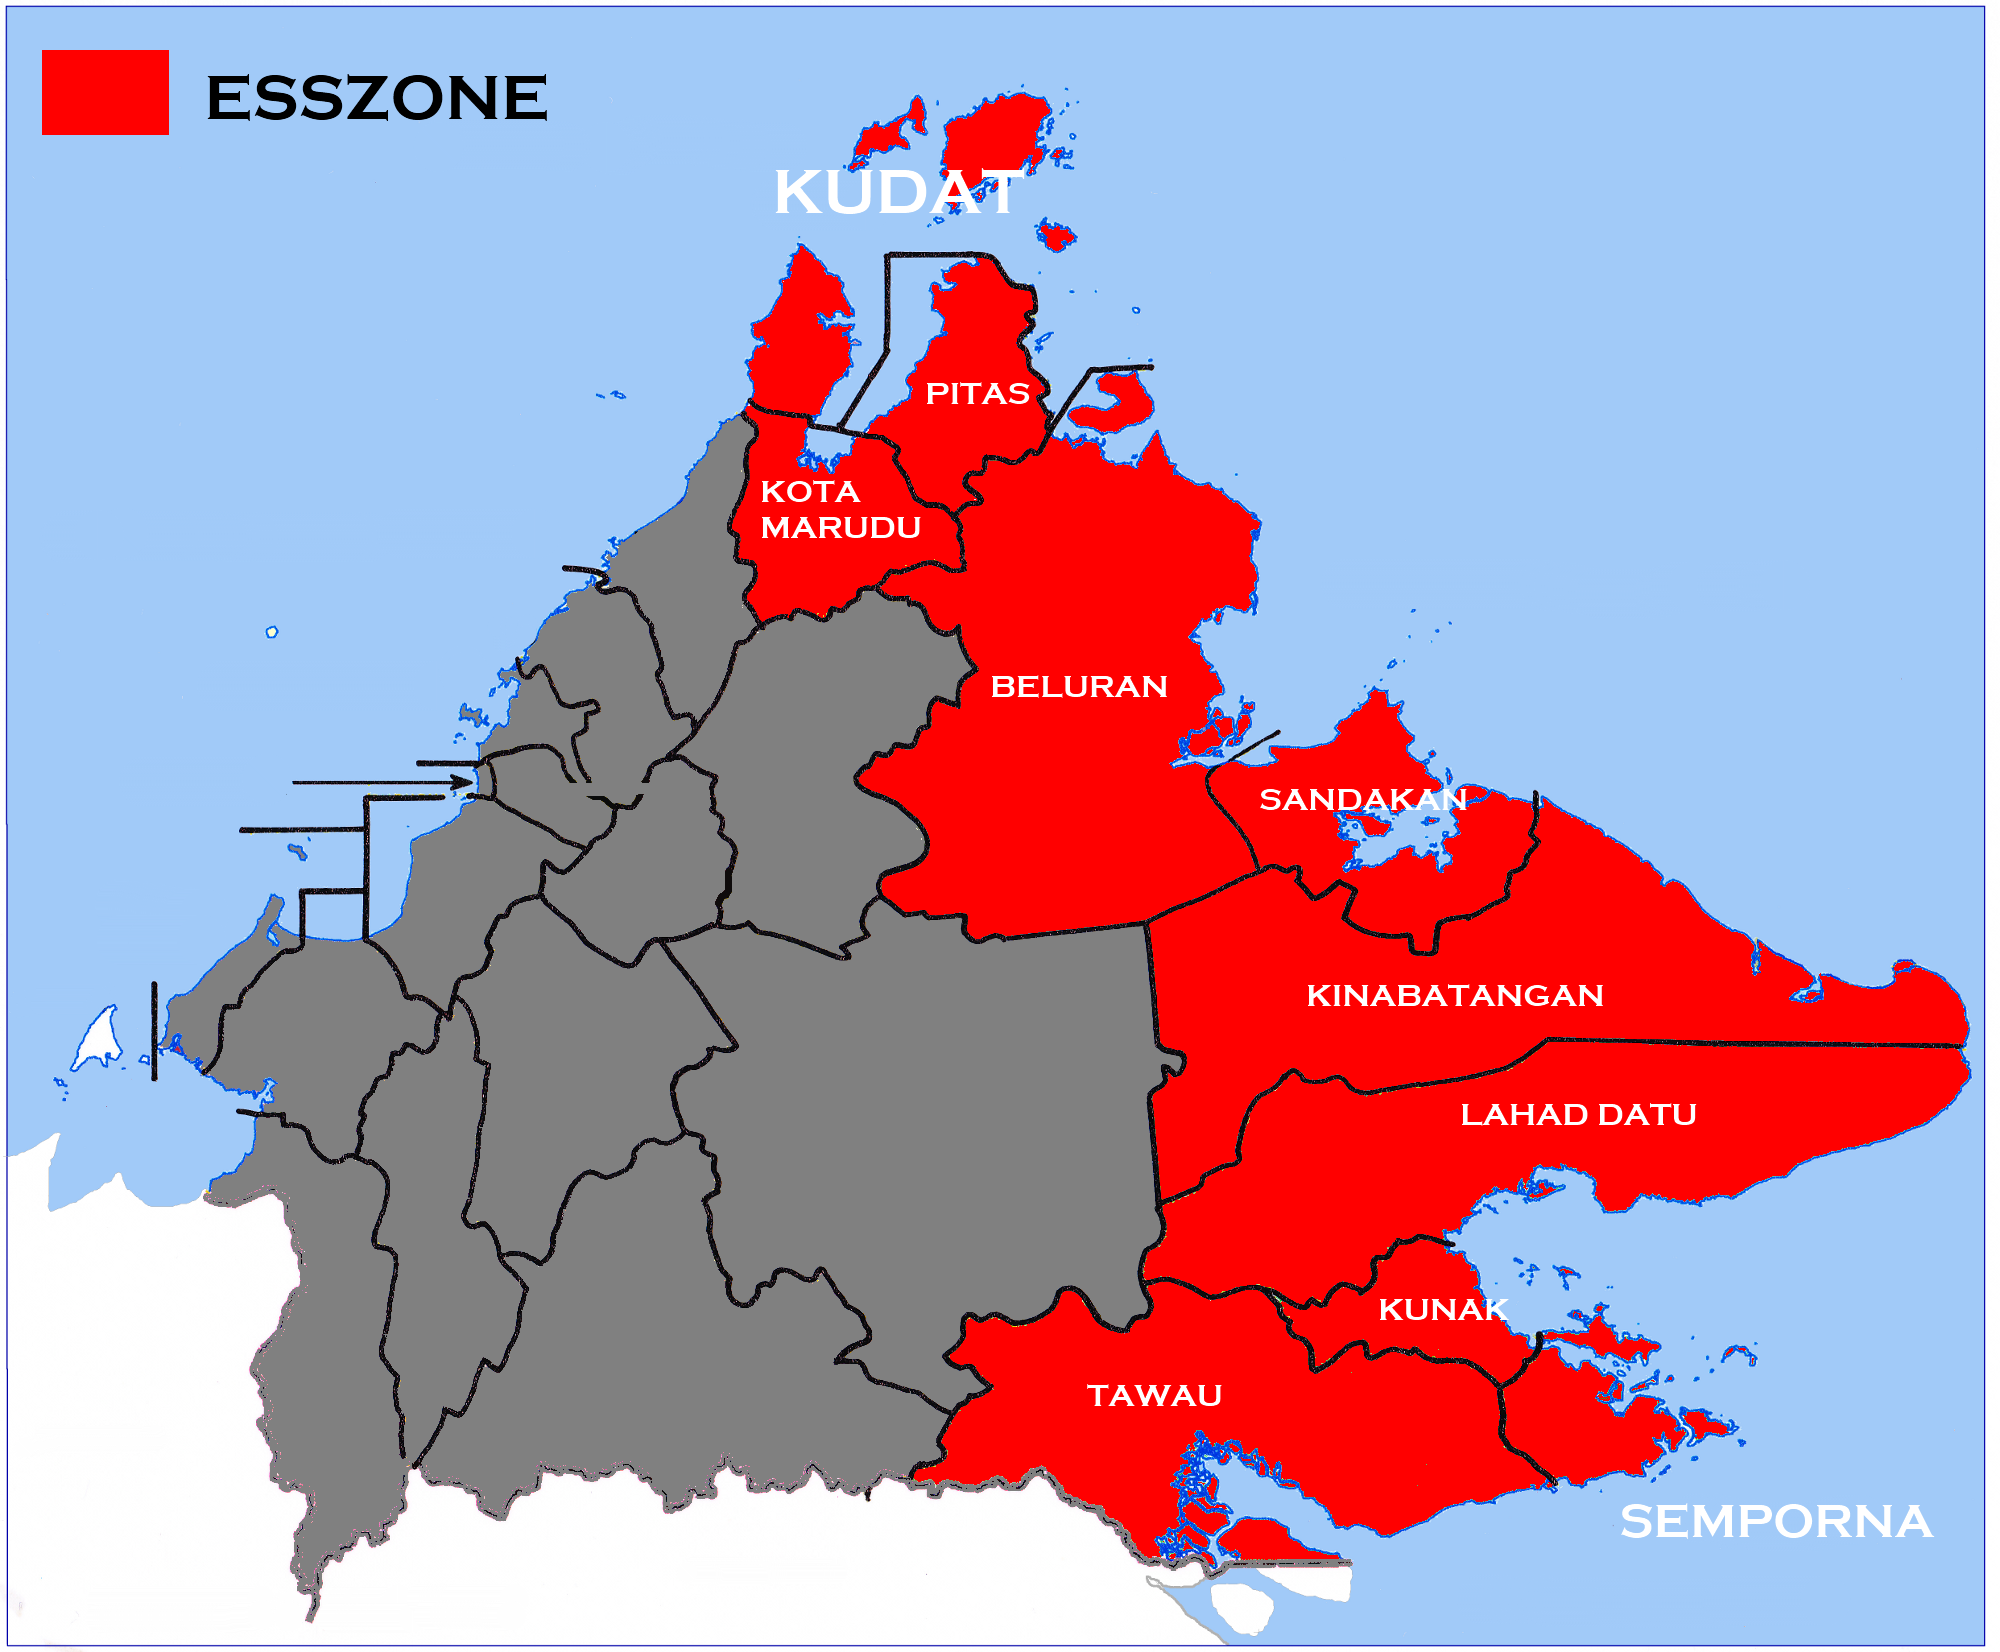 ESSZONE_Map